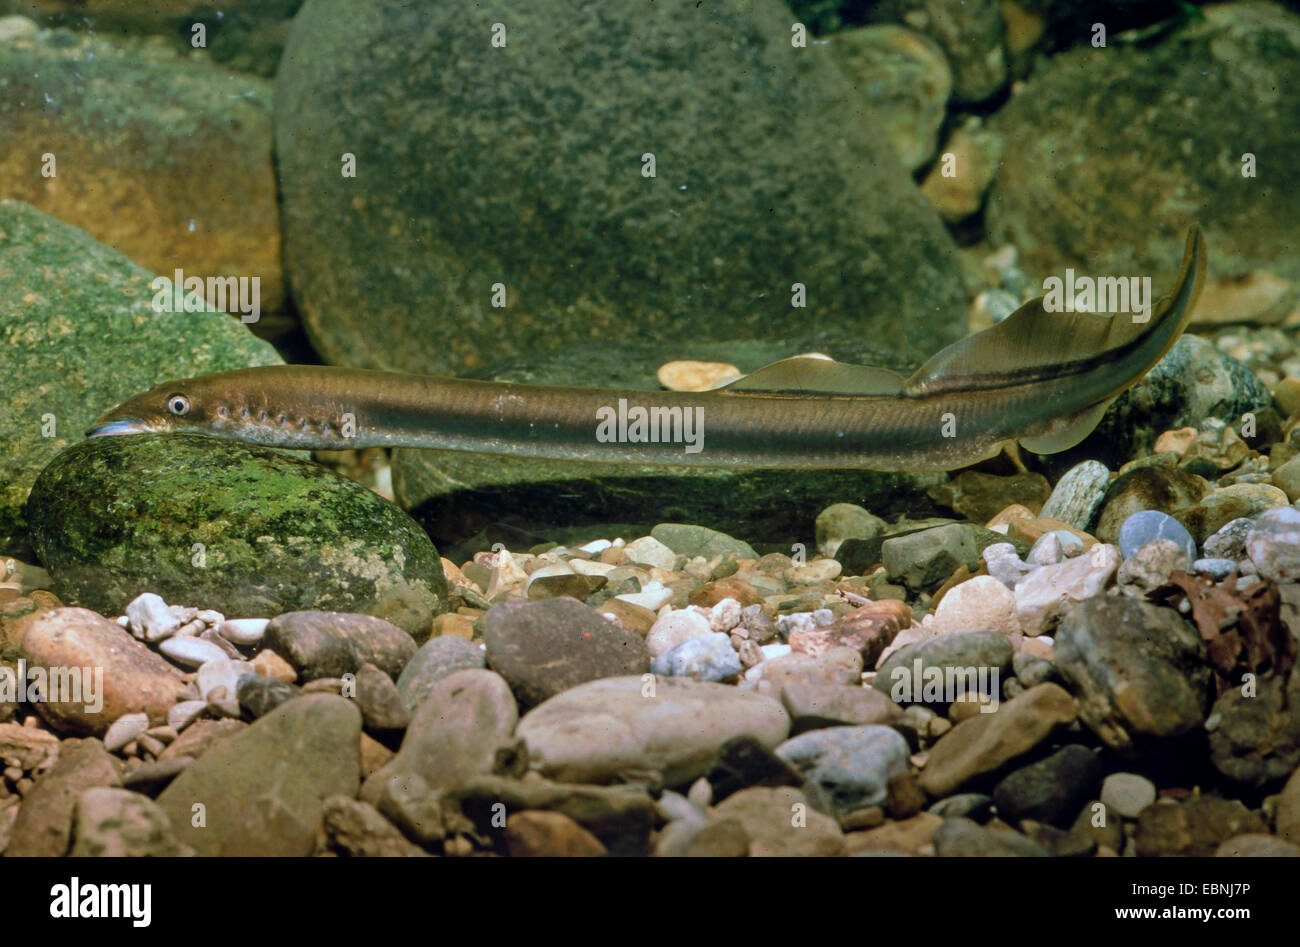 river lamprey, lampern, European river lamprey (Lampetra fluvialis), adhered at a stone, Germany Stock Photo